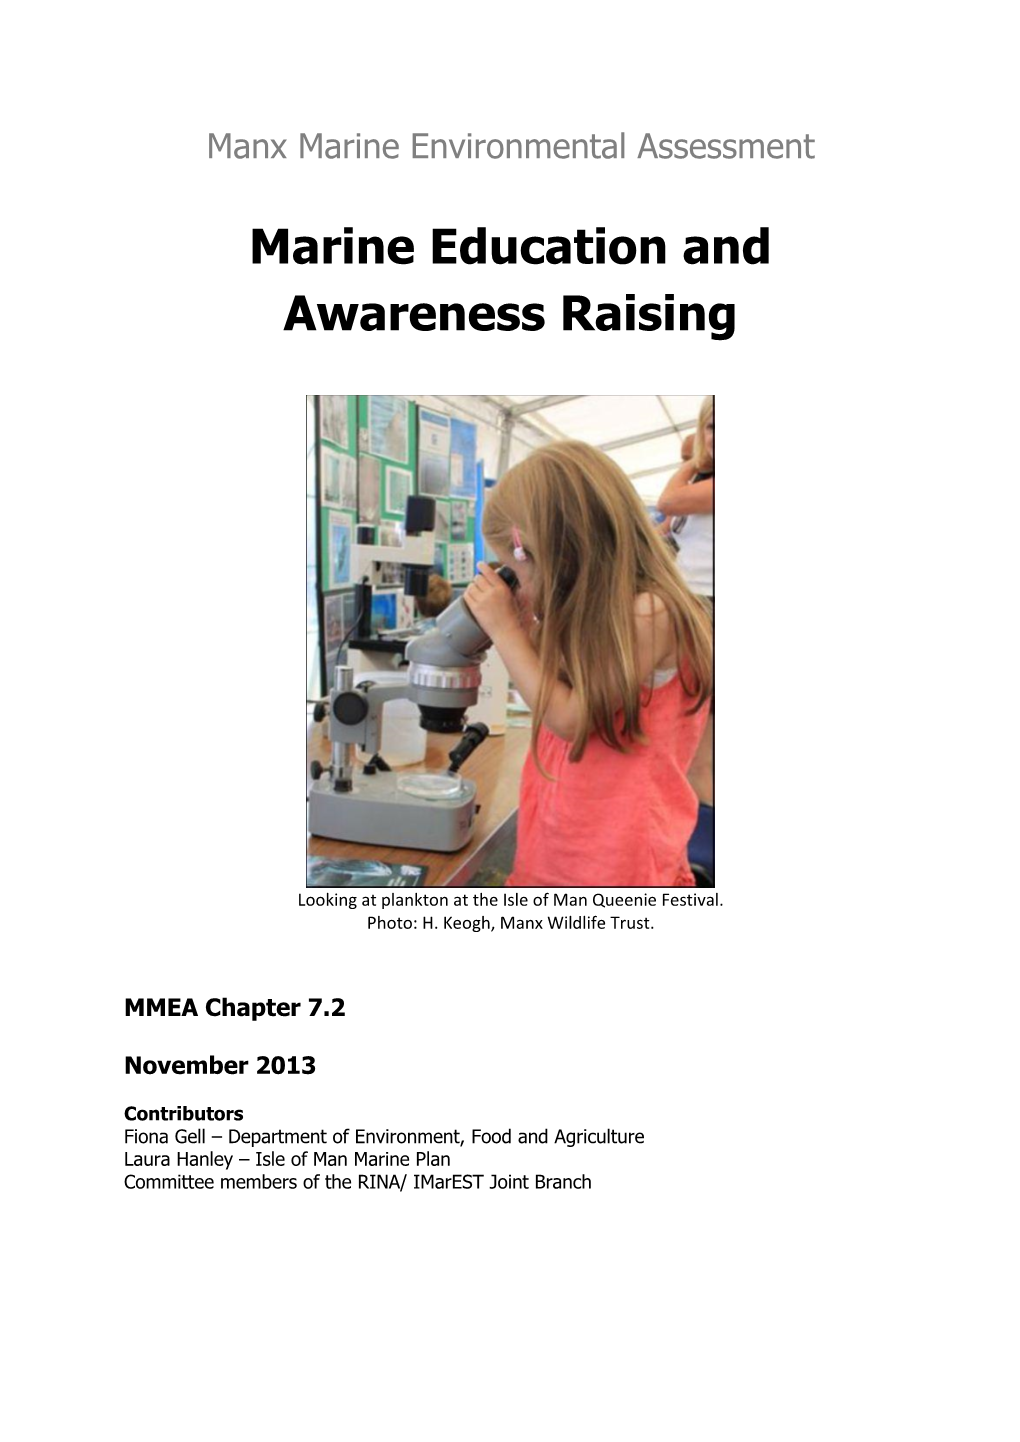 Marine Education and Awareness Raising